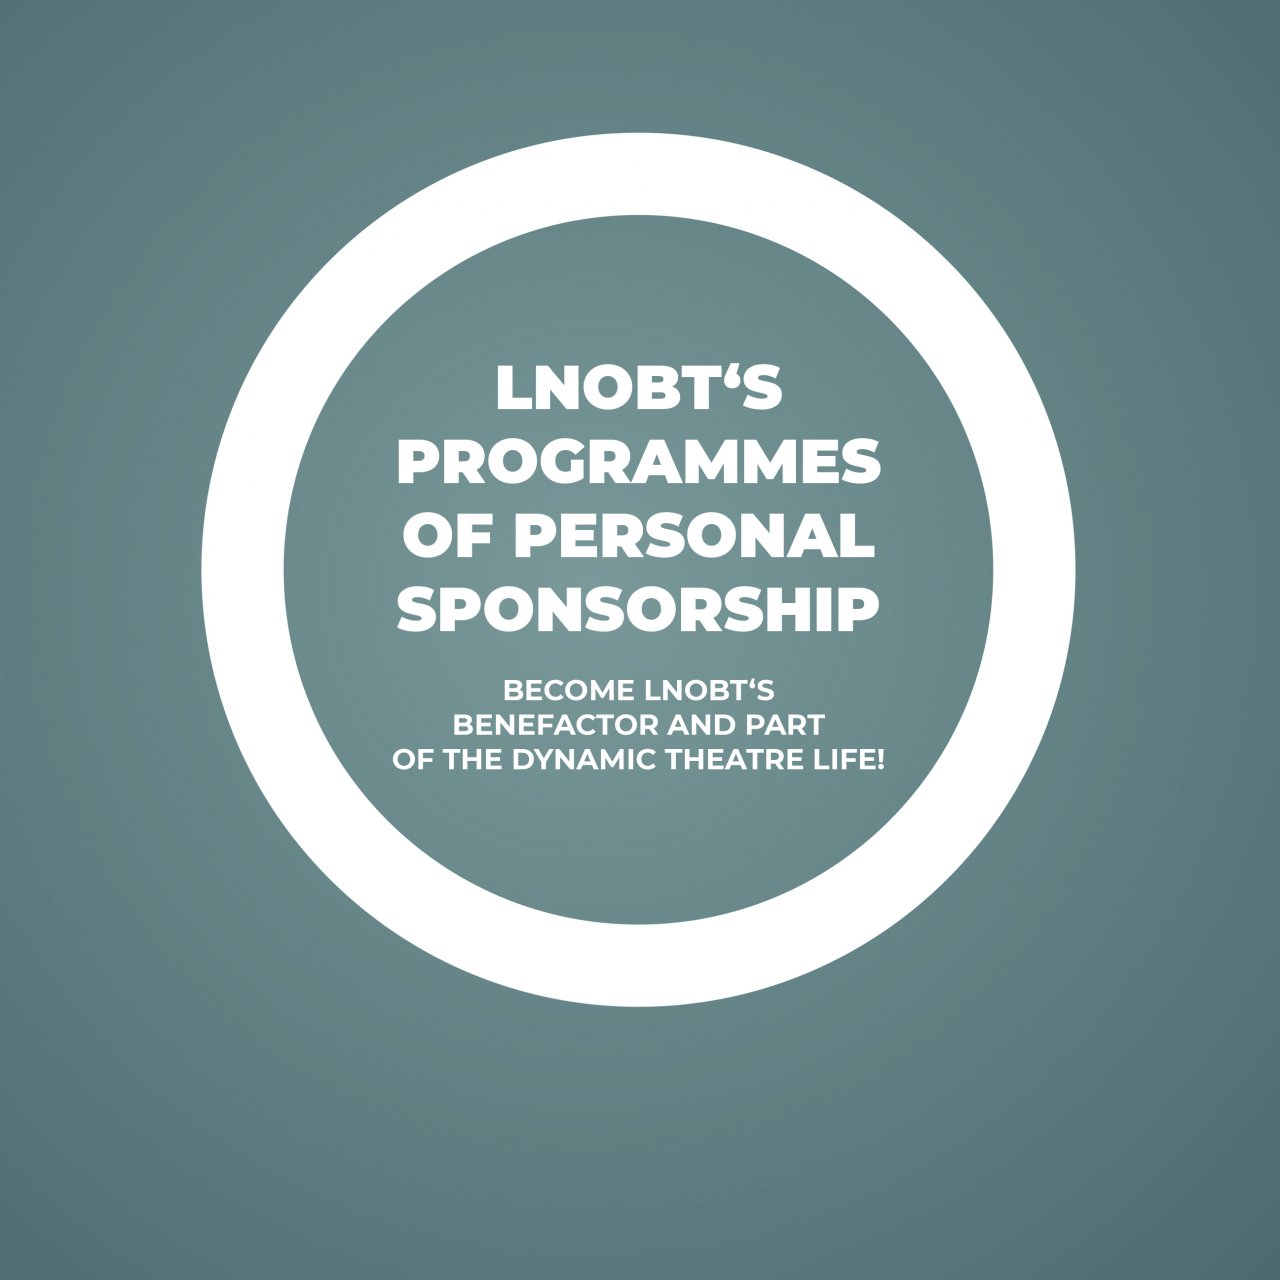 Three programmes of sponsorship